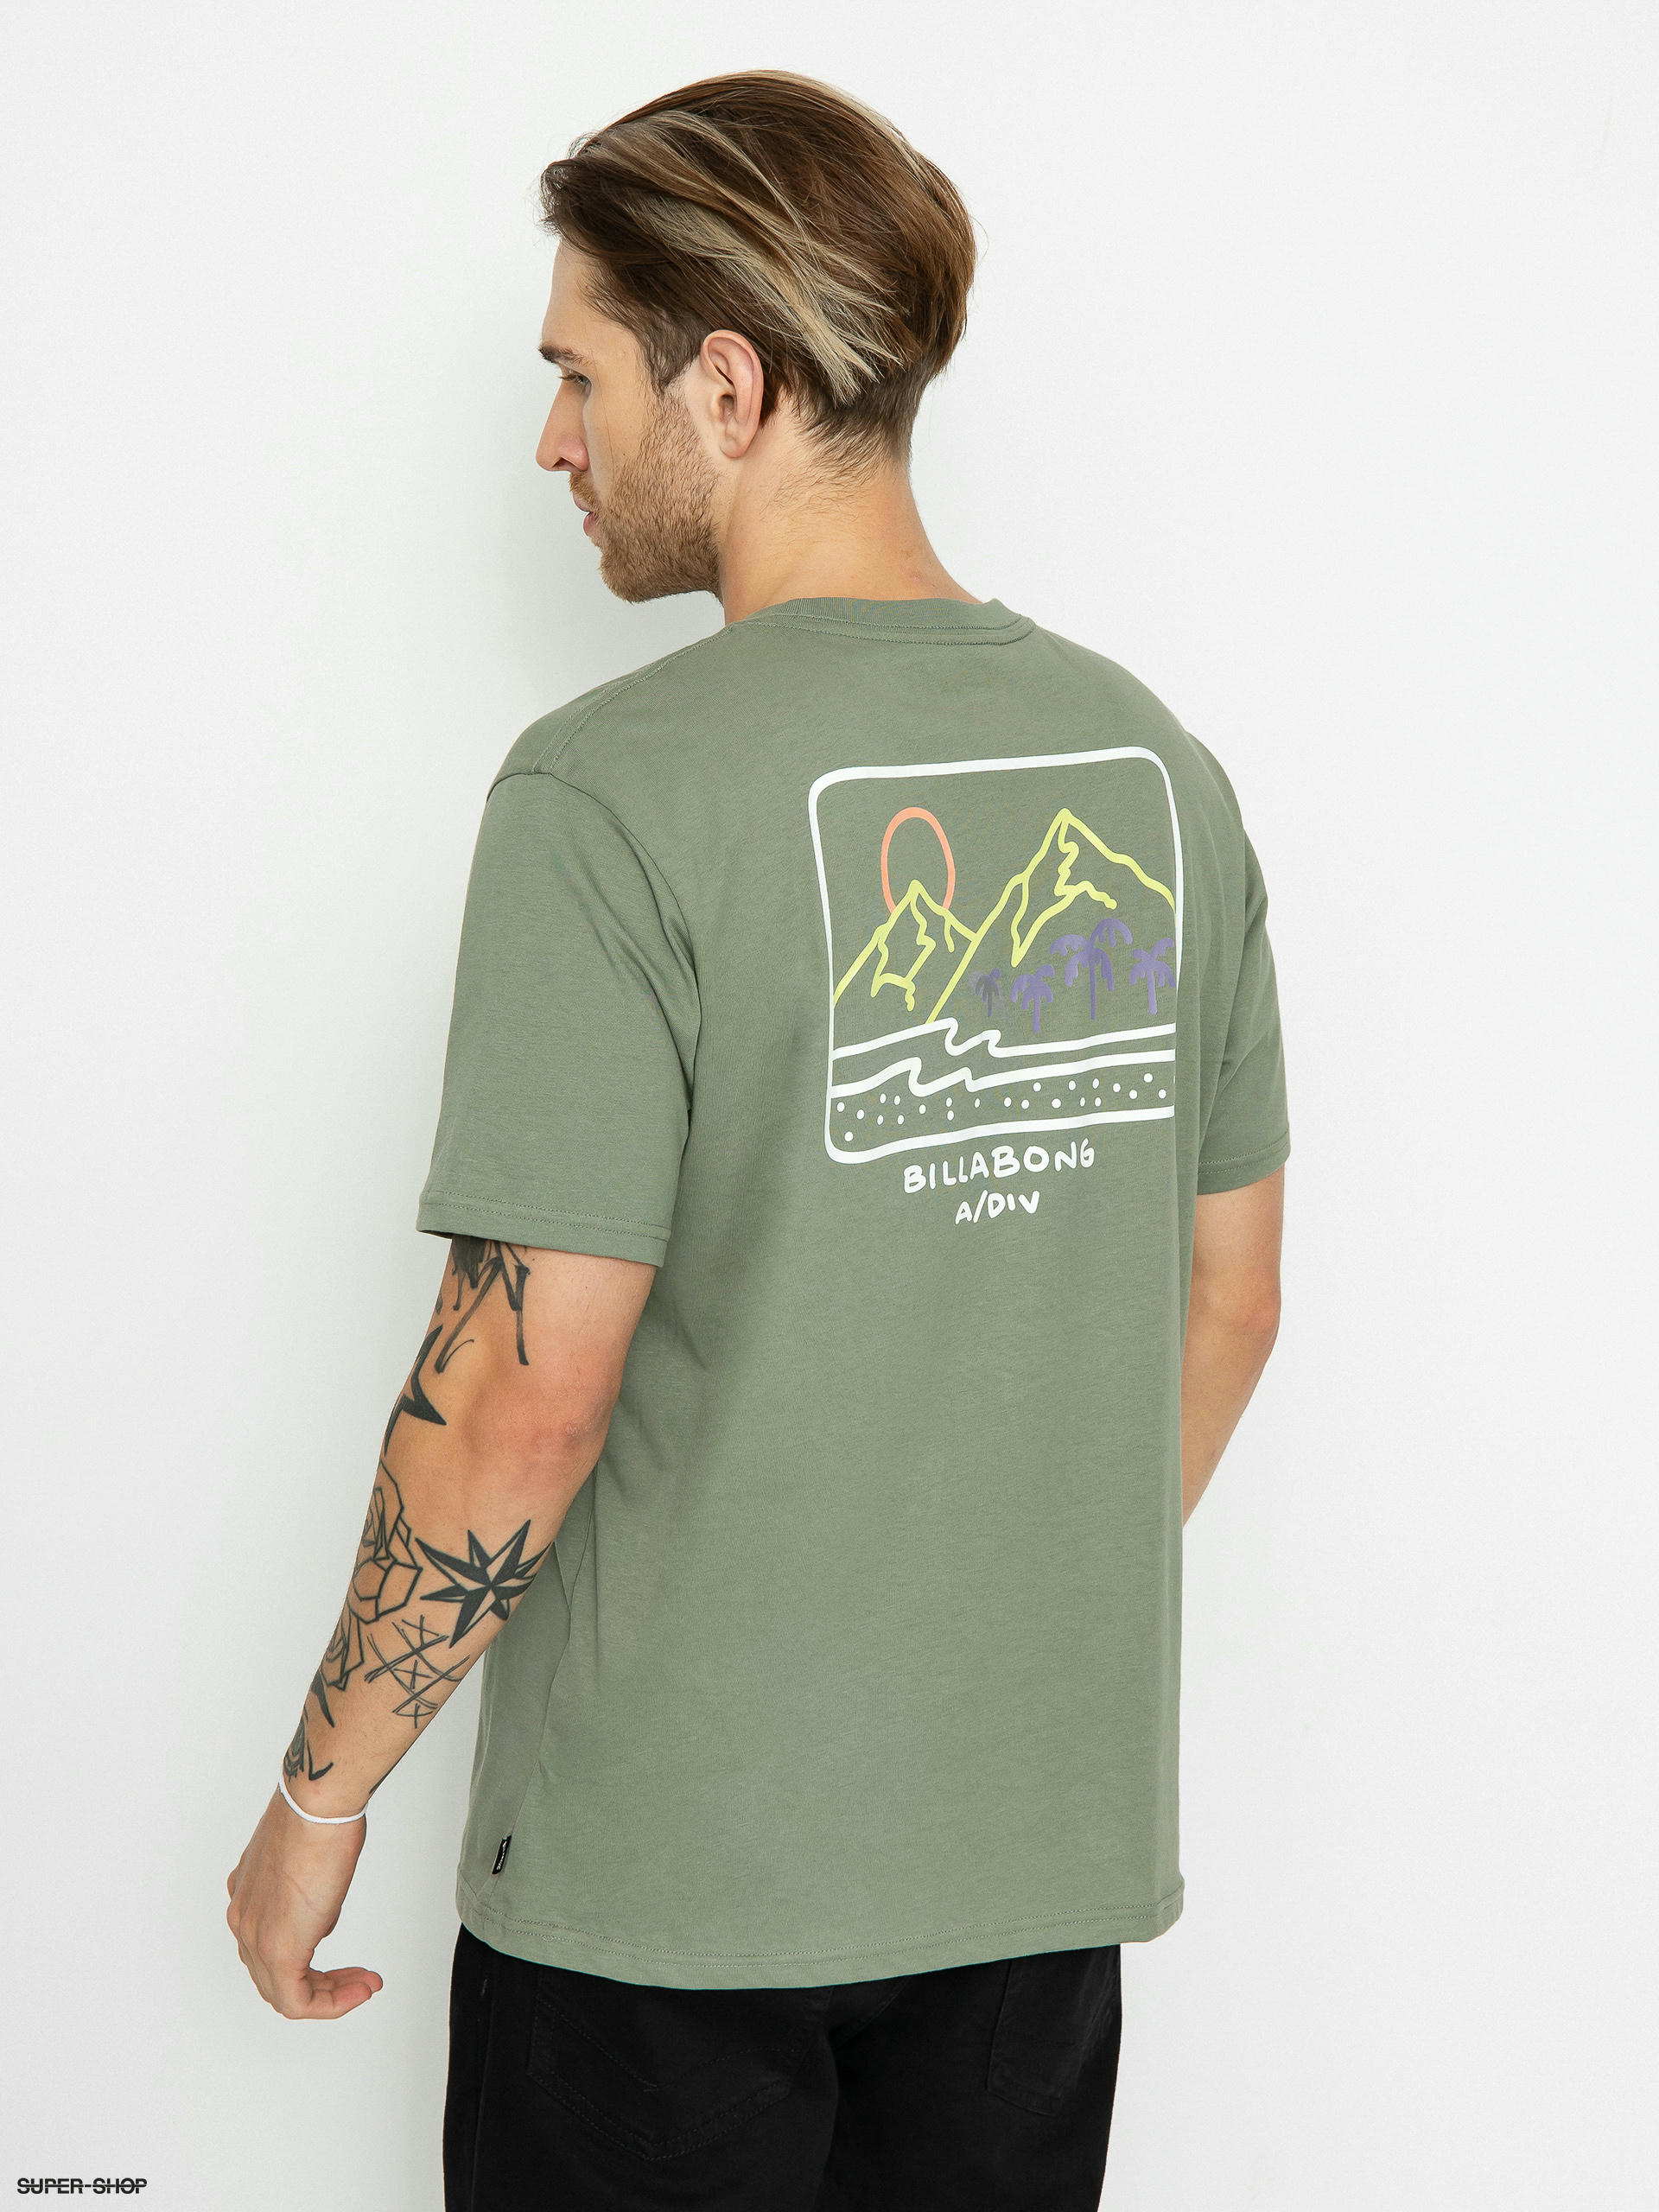 Carhartt WIP University T-shirt (discovery green/gold)